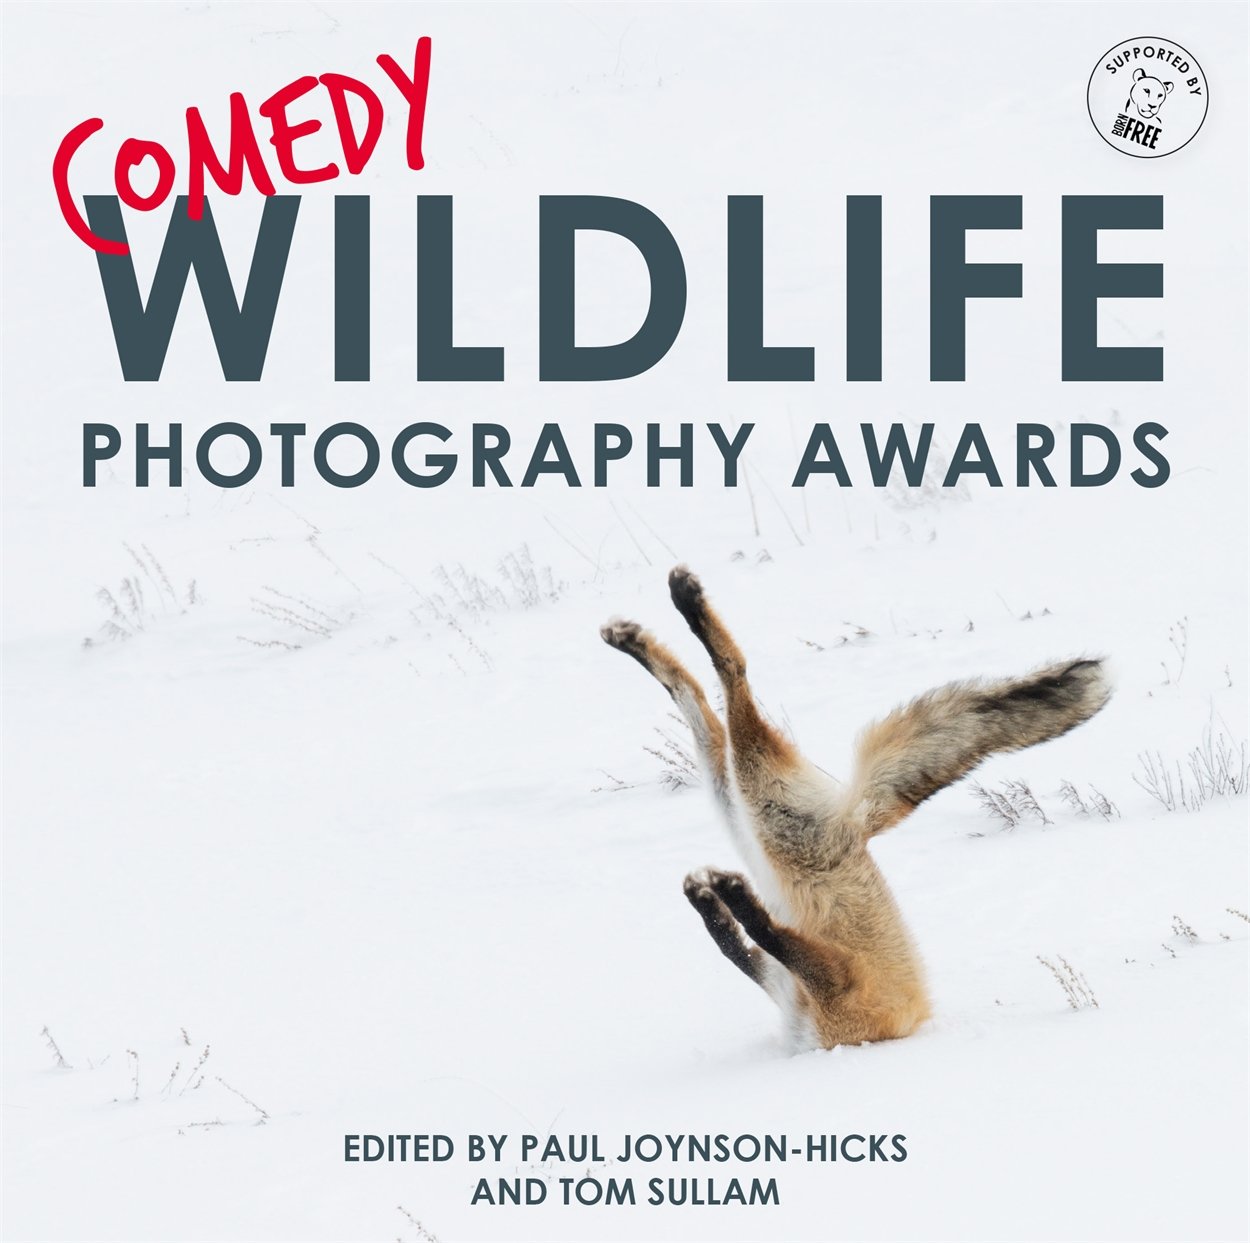 Comedy Wildlife Photography Awards | Paul Joynson-Hicks